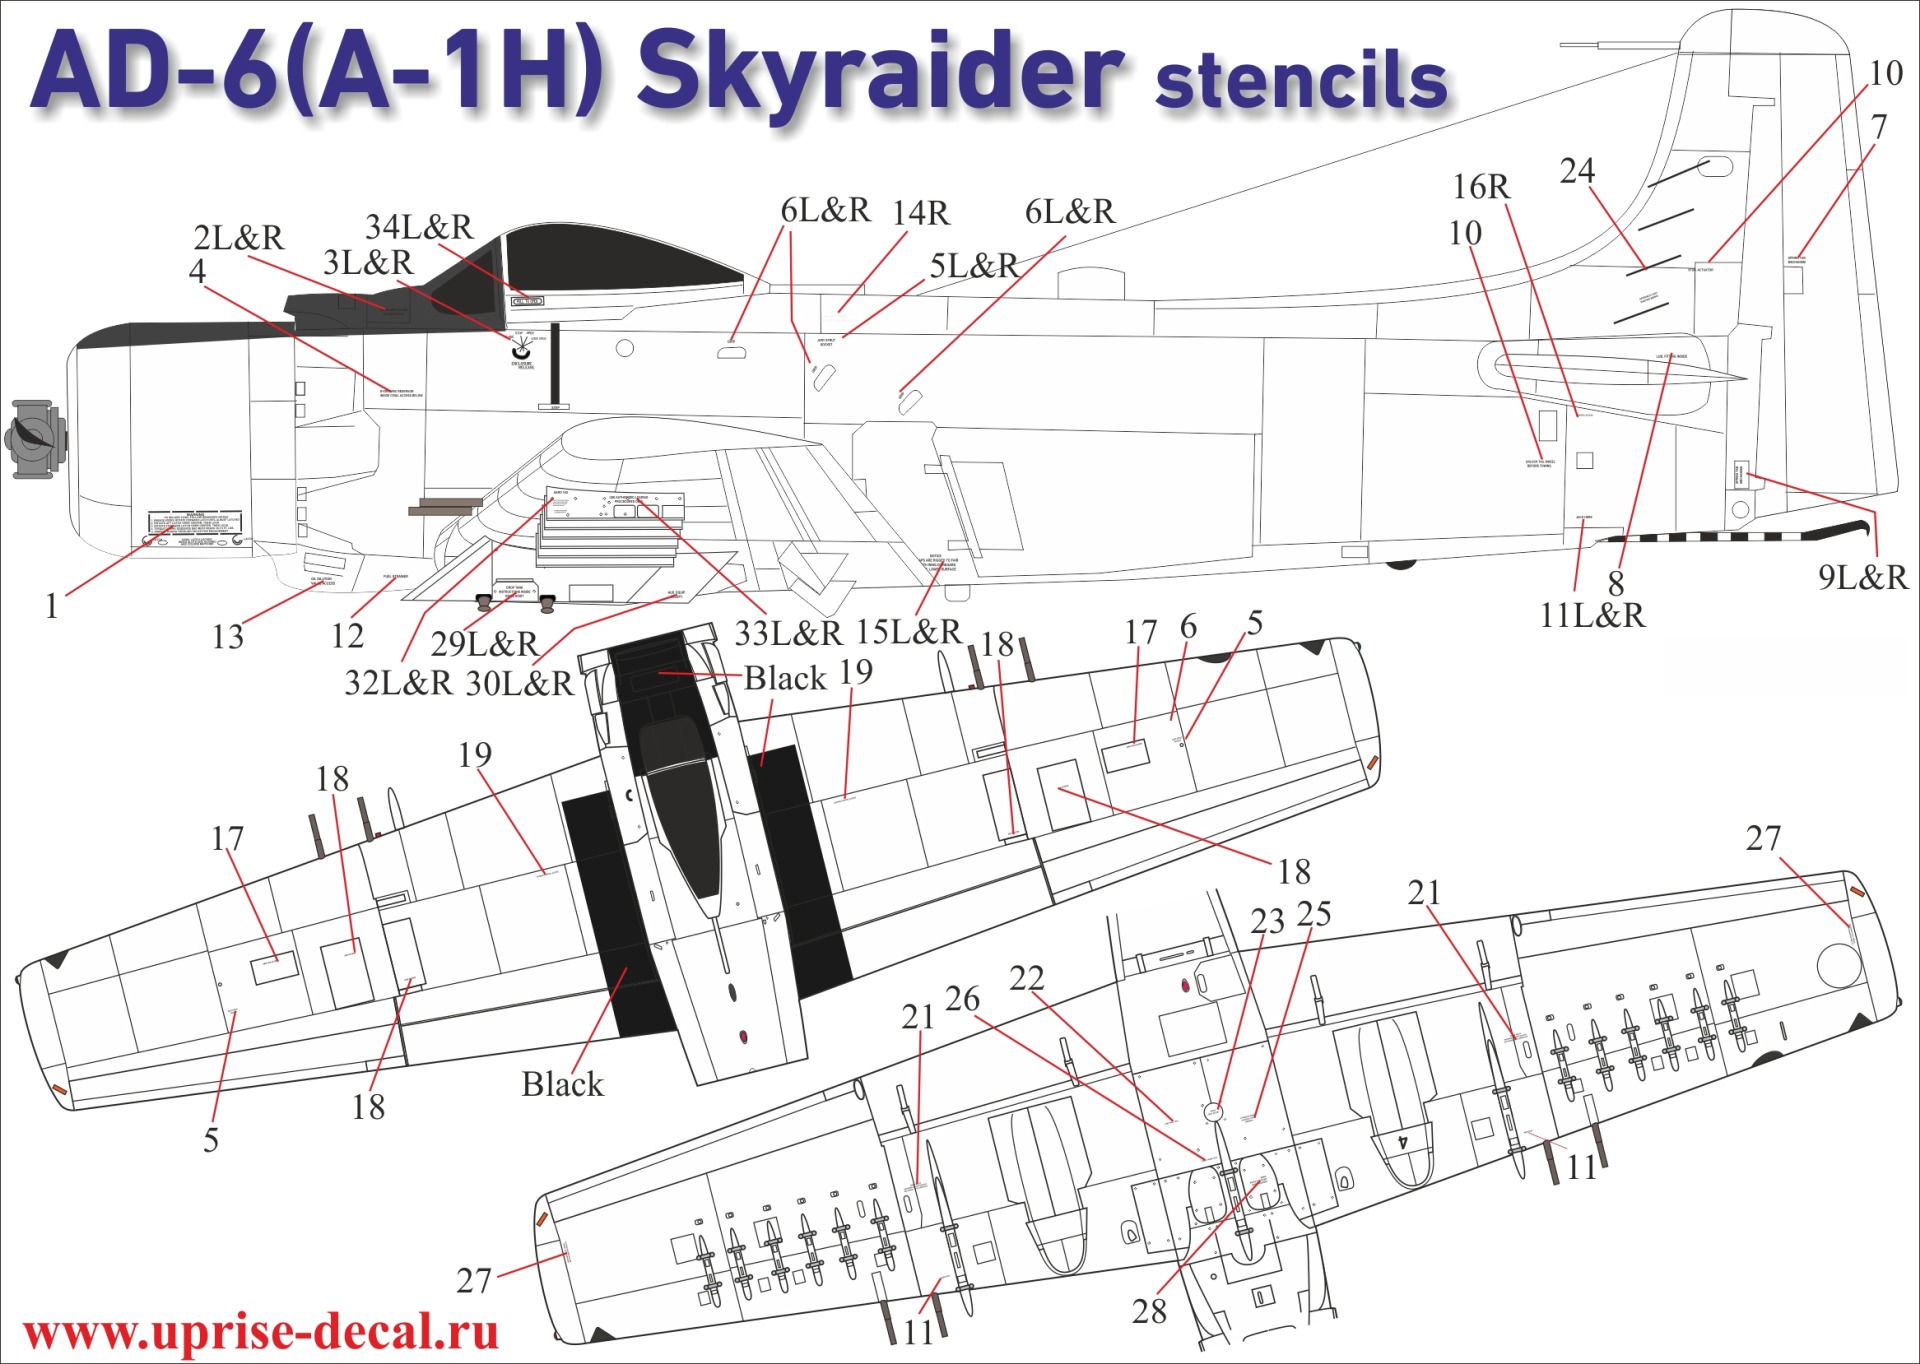 UR72151  декали  AD-6 (A-1H) Skyraider stencils (white)  (1:72)